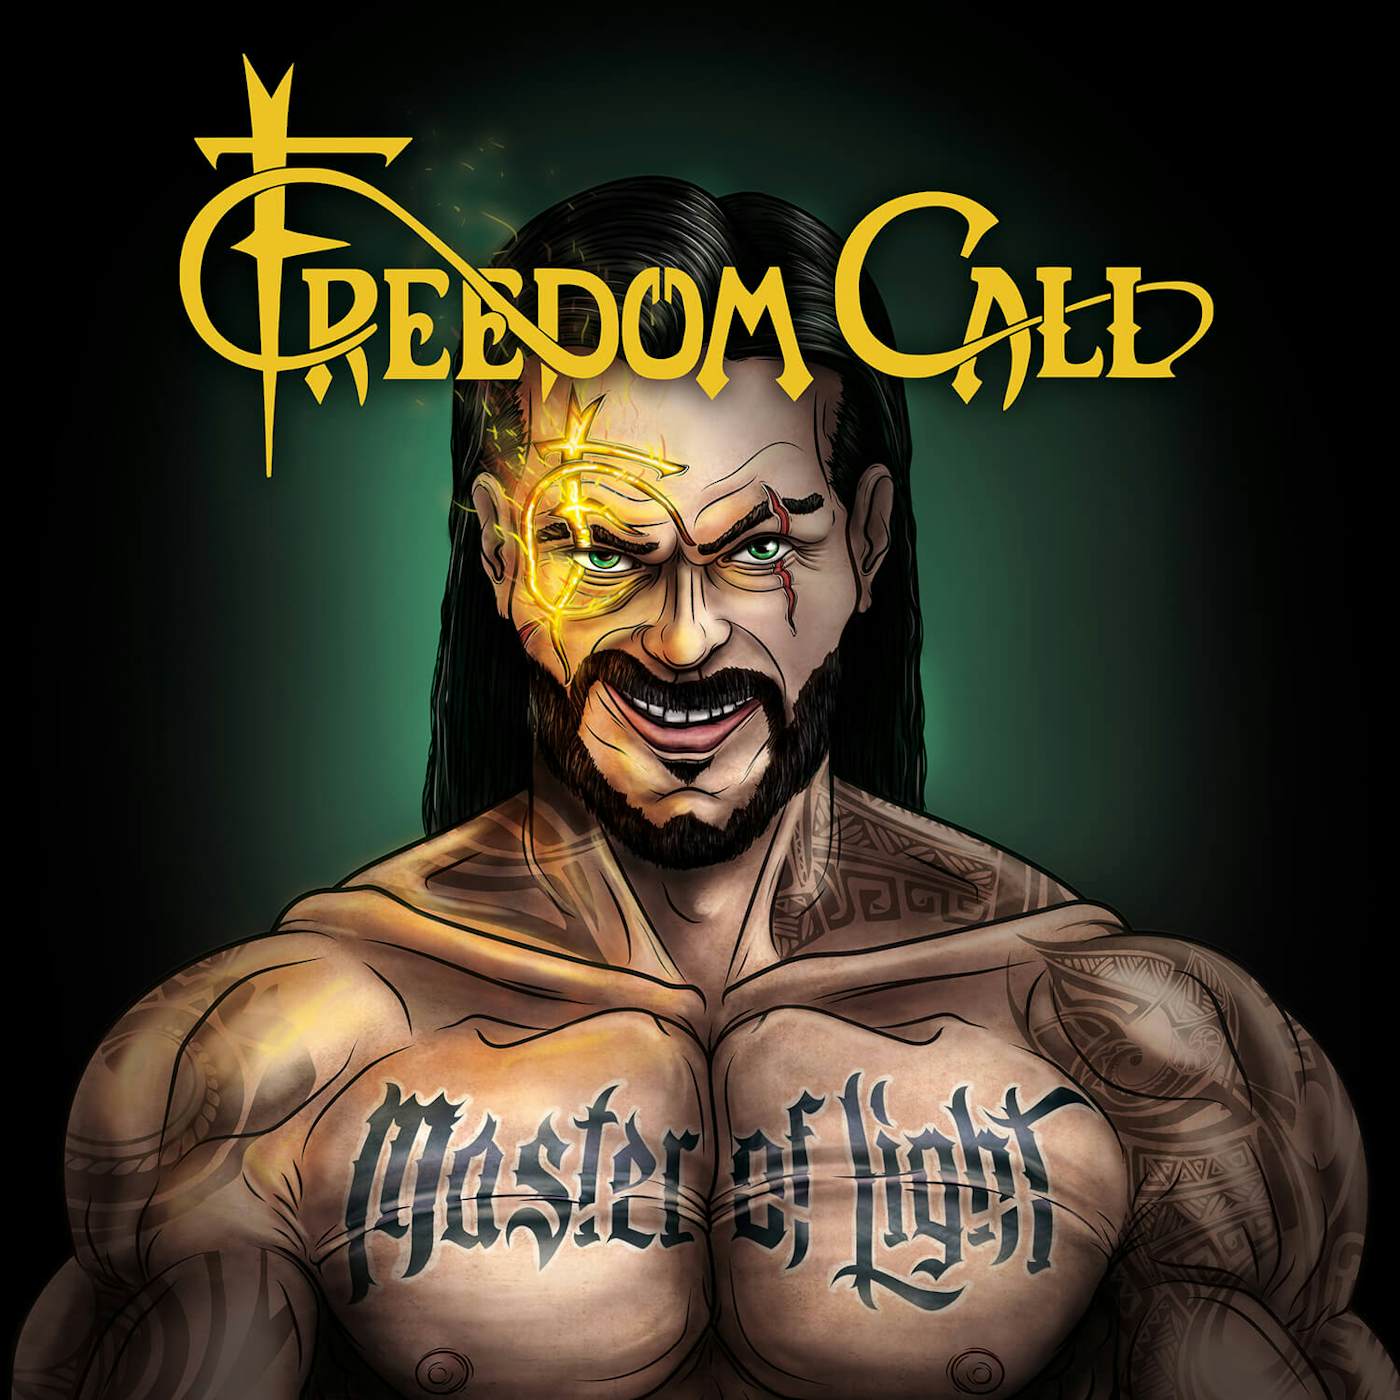 Freedom Call Master Of Light Vinyl Record